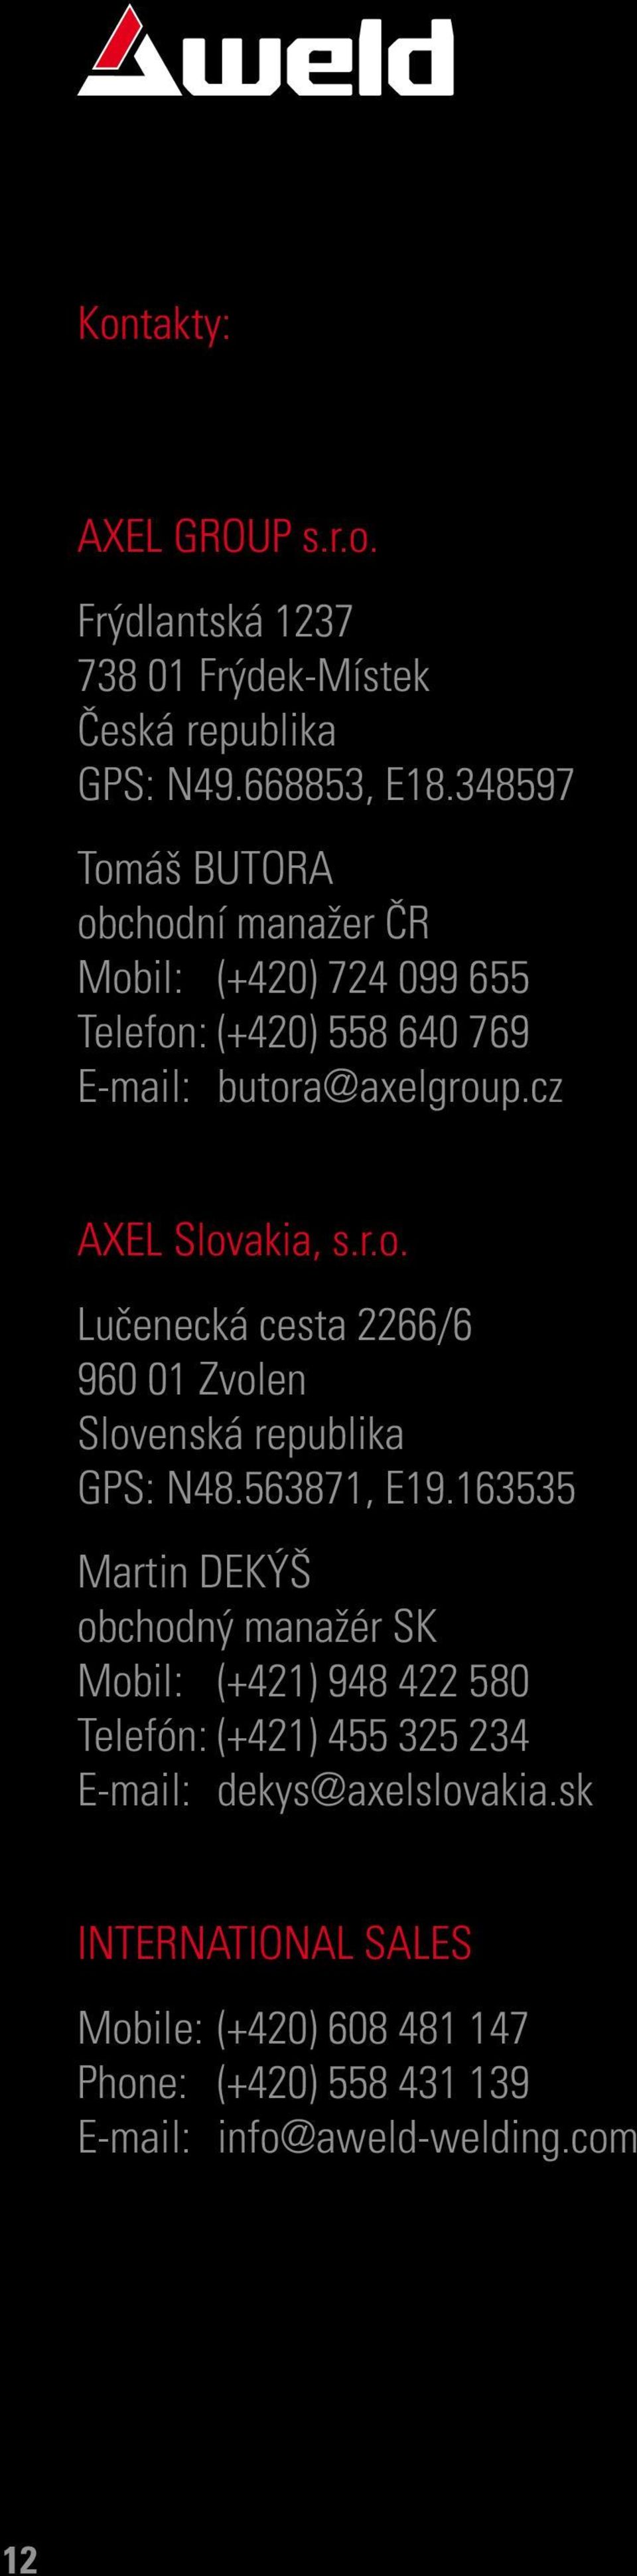 r.o. Lučenecká cesta 2266/6 960 01 Zvolen Slovenská republika GPS: N48.563871, E19.